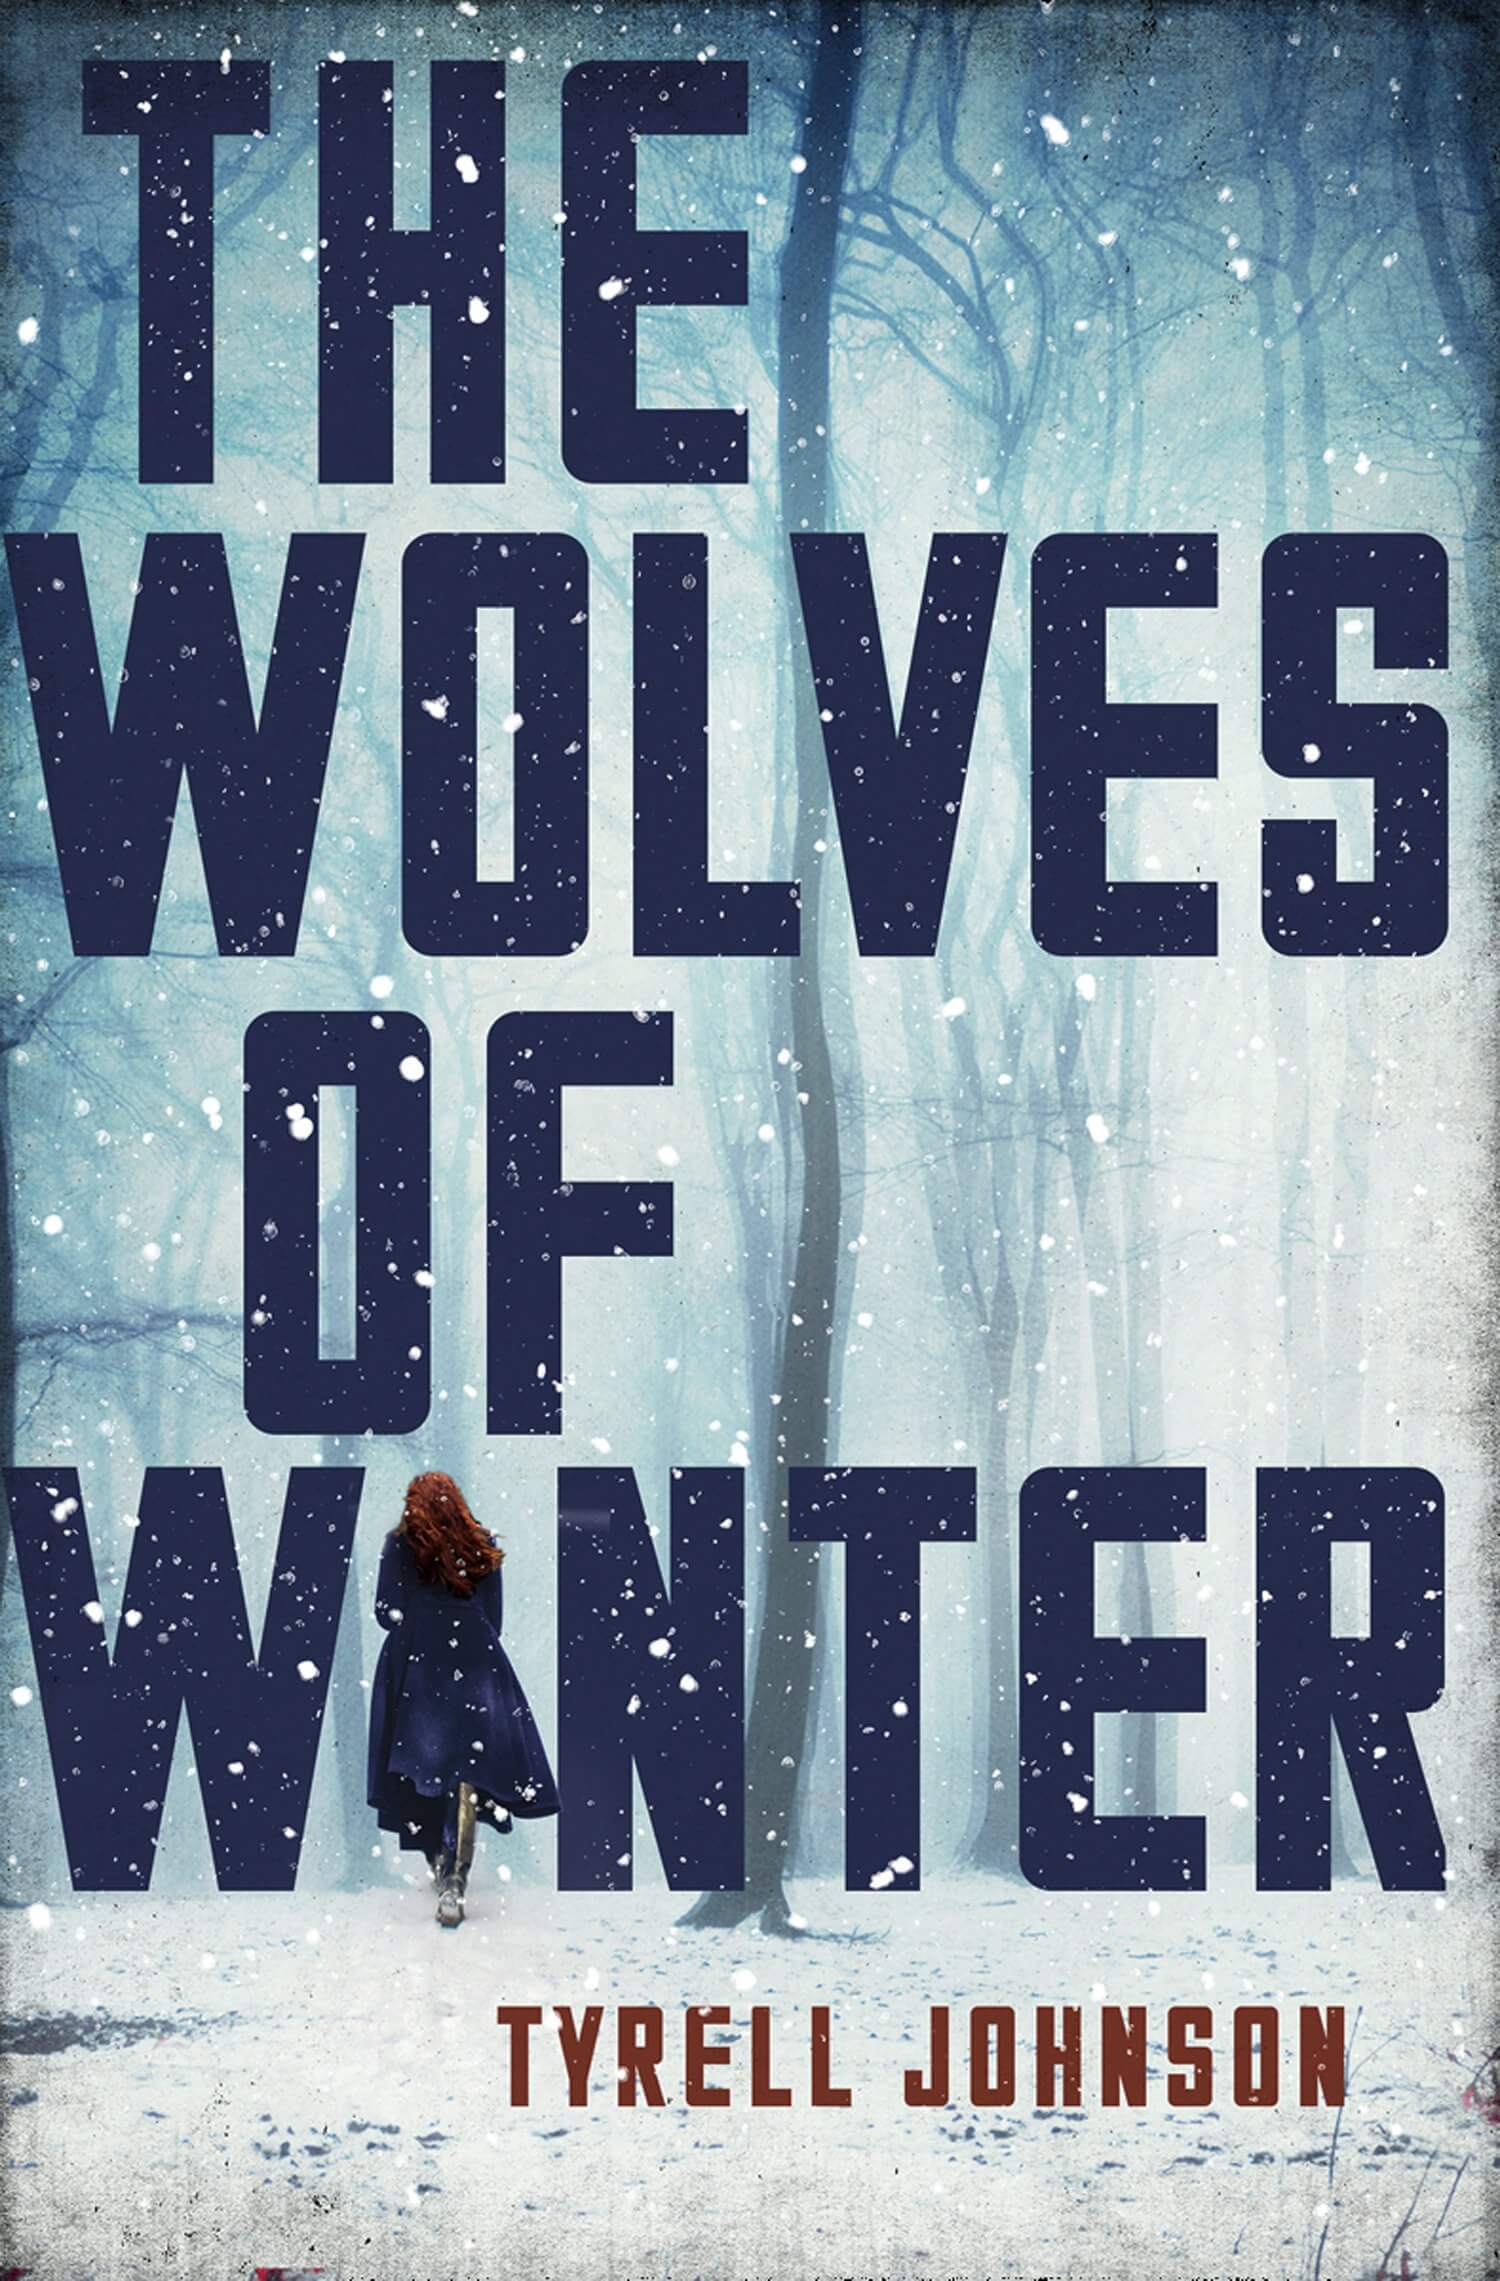 wolves-winter